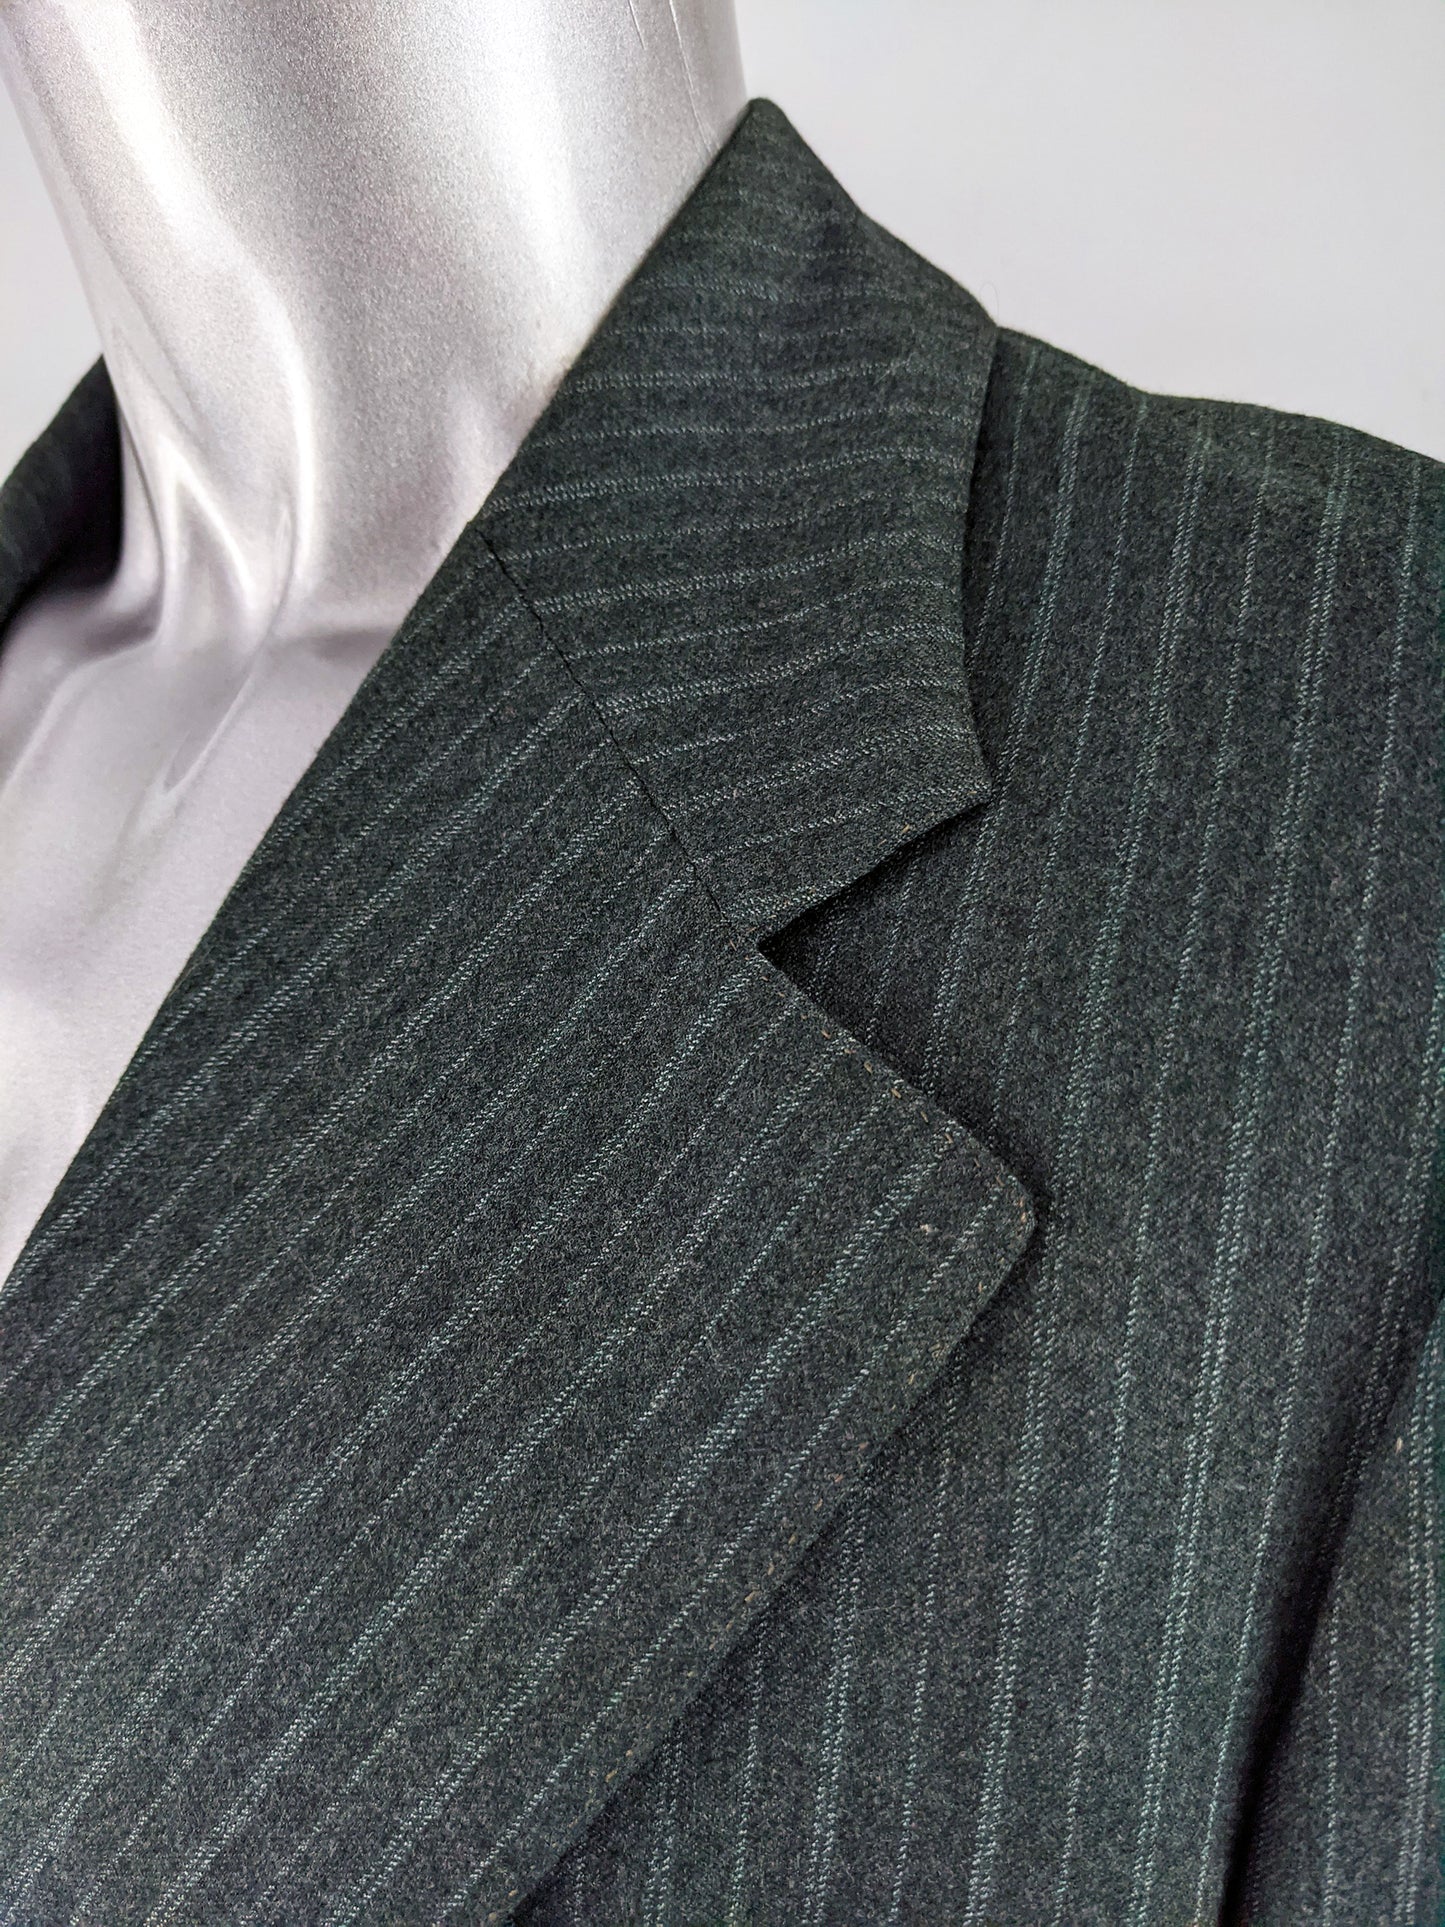 Cerruti 1881 Vintage Mens Green Wool Tailored Blazer, 1970s